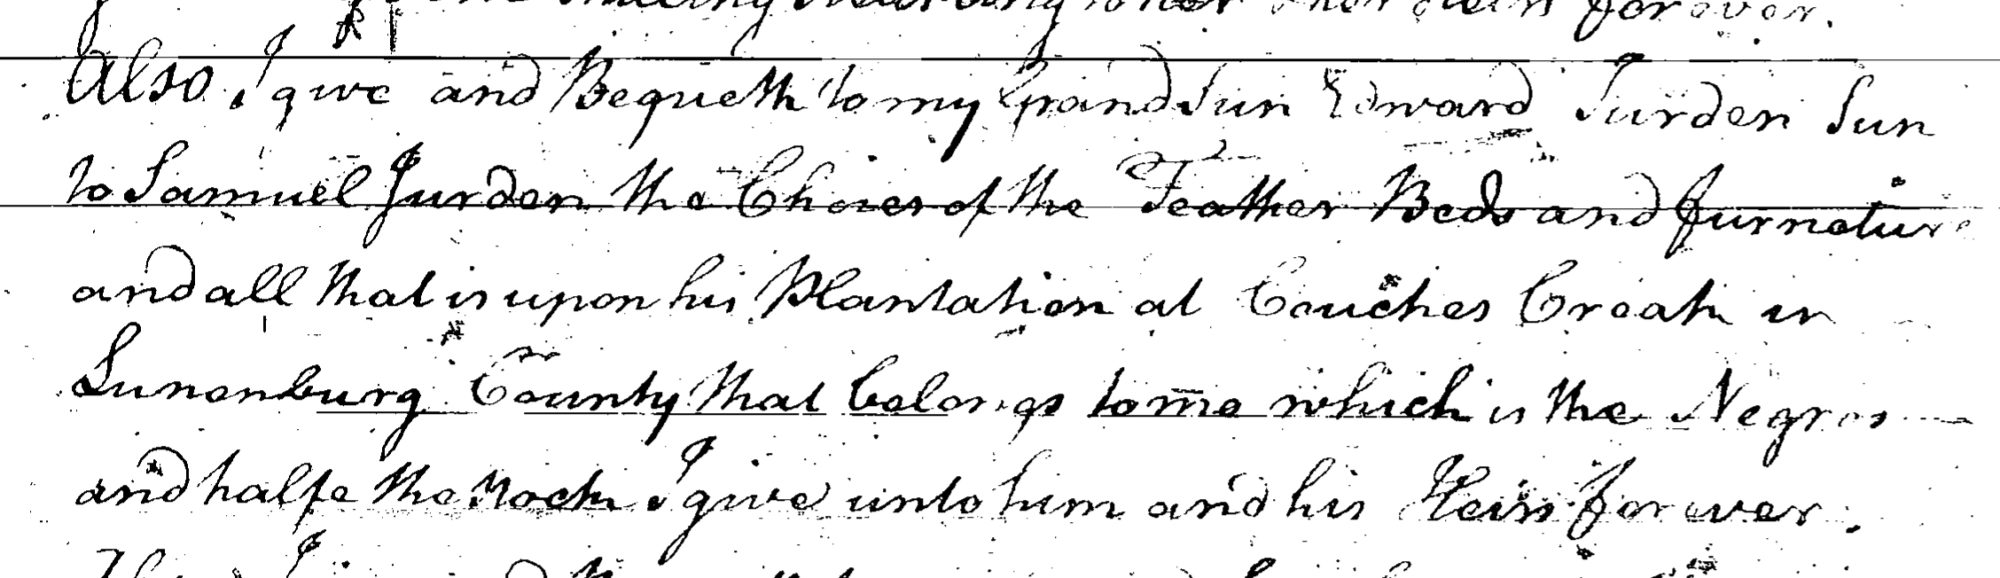 Samuel Jurden 1760 will, cropped section for grandson Edward Jordan